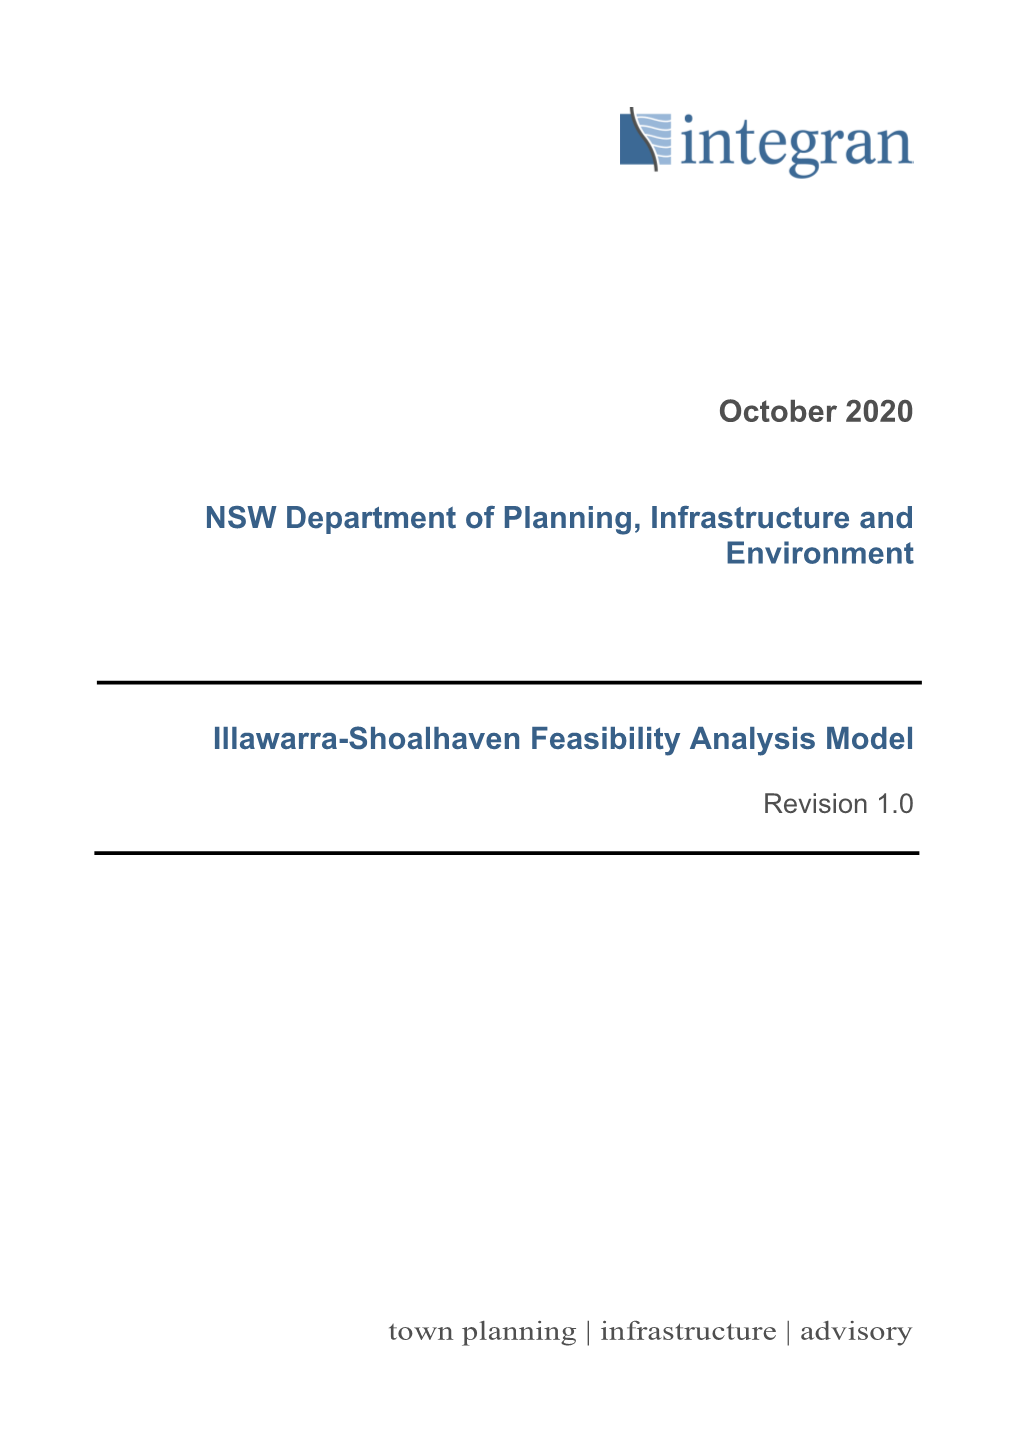 Illawarra Shoalhaven Feasibility Model Summary